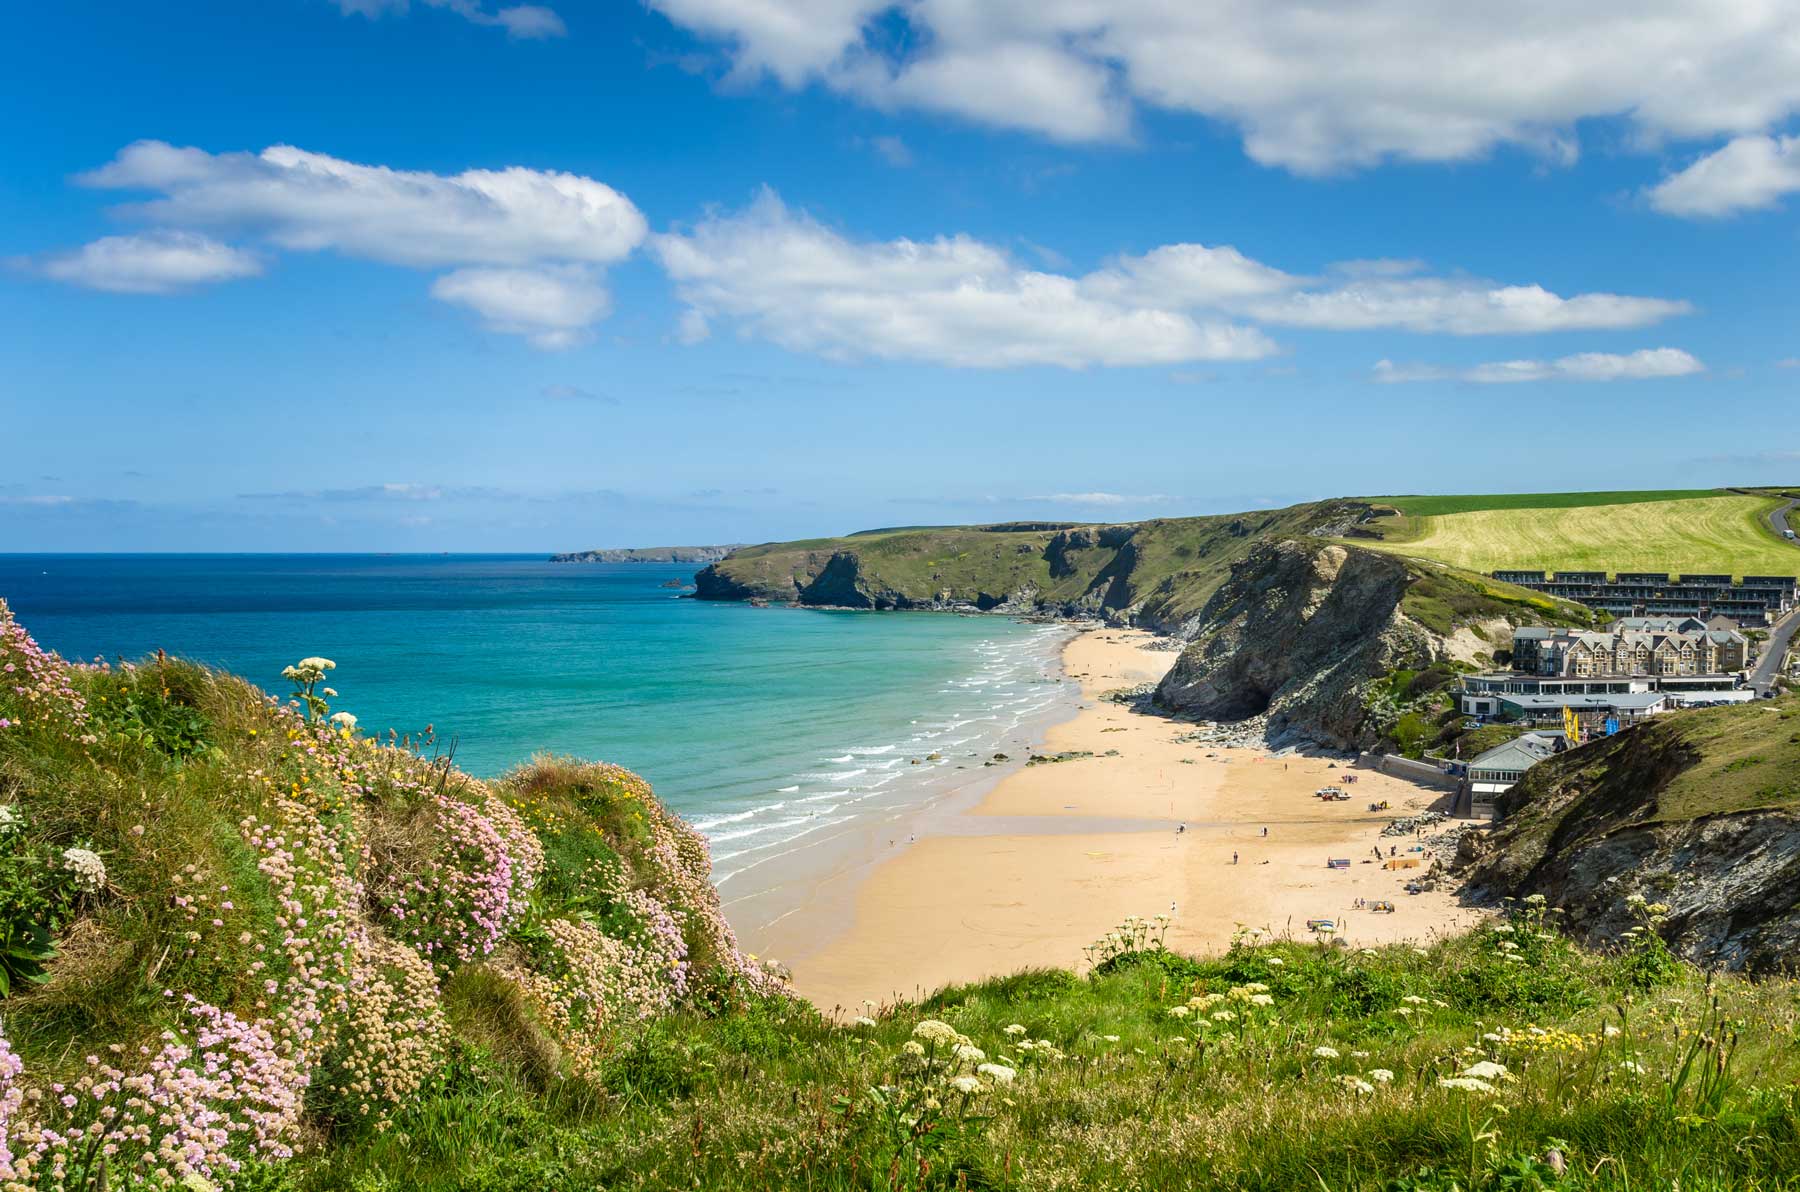 view of Cornish beach and coast line